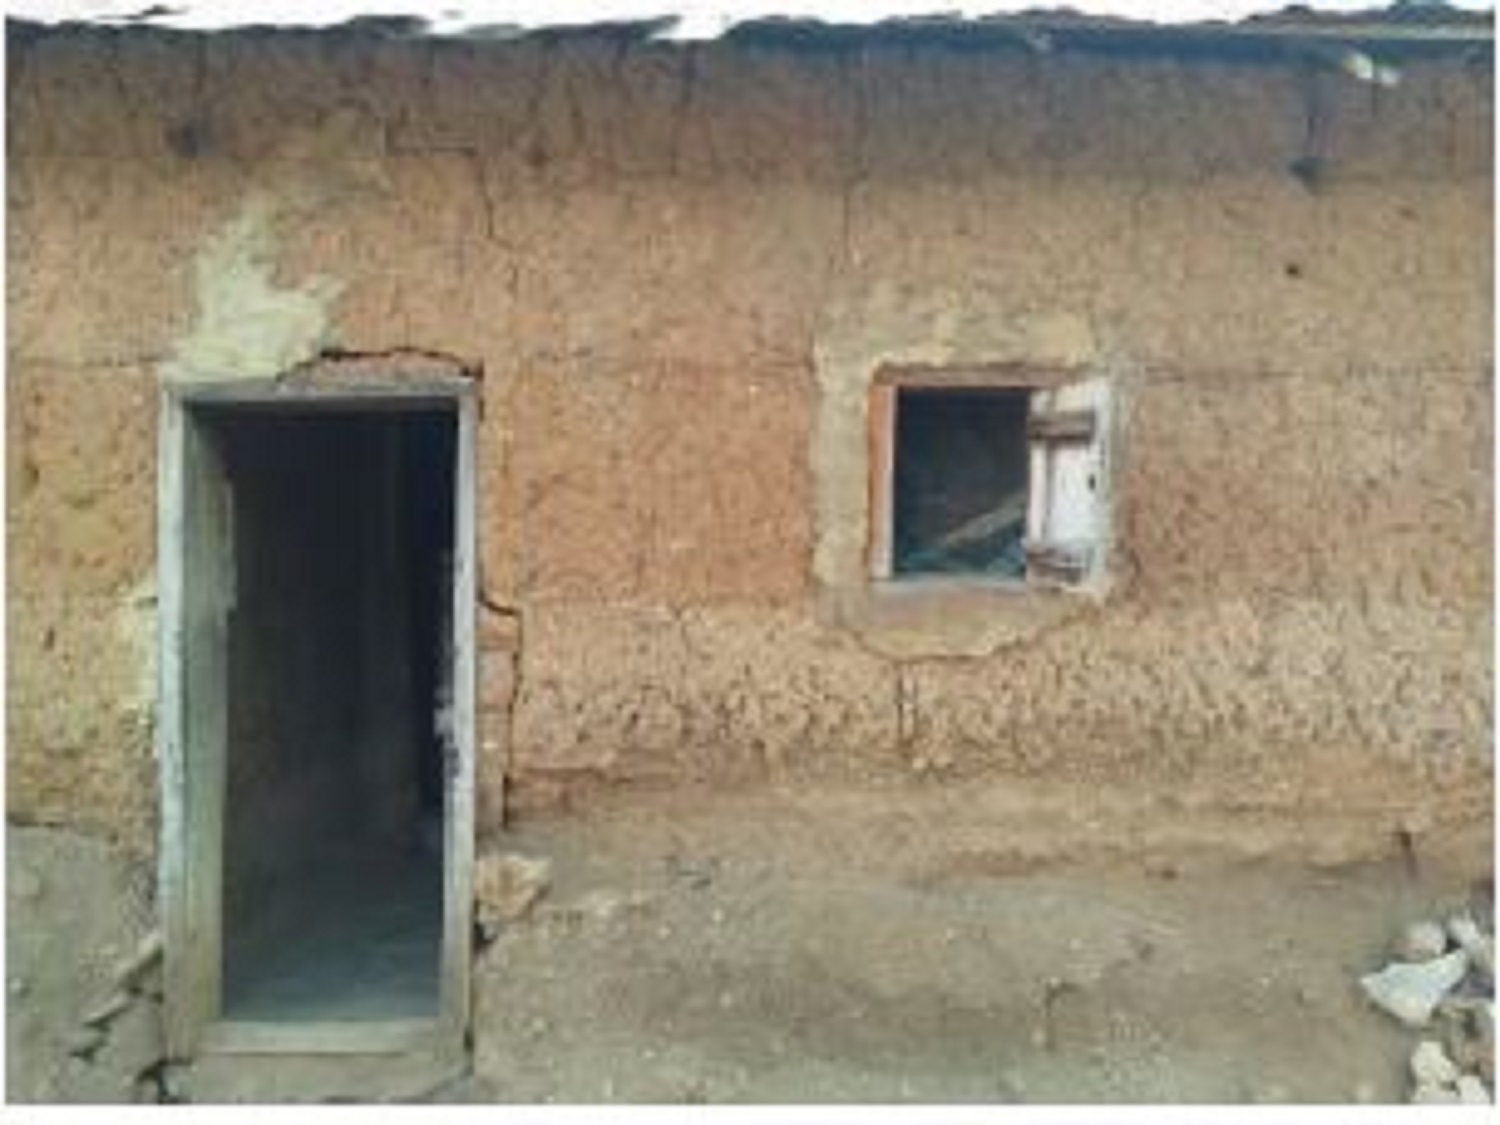 Awotiku Family House - Ilekun (Door) and Ferese (Window)